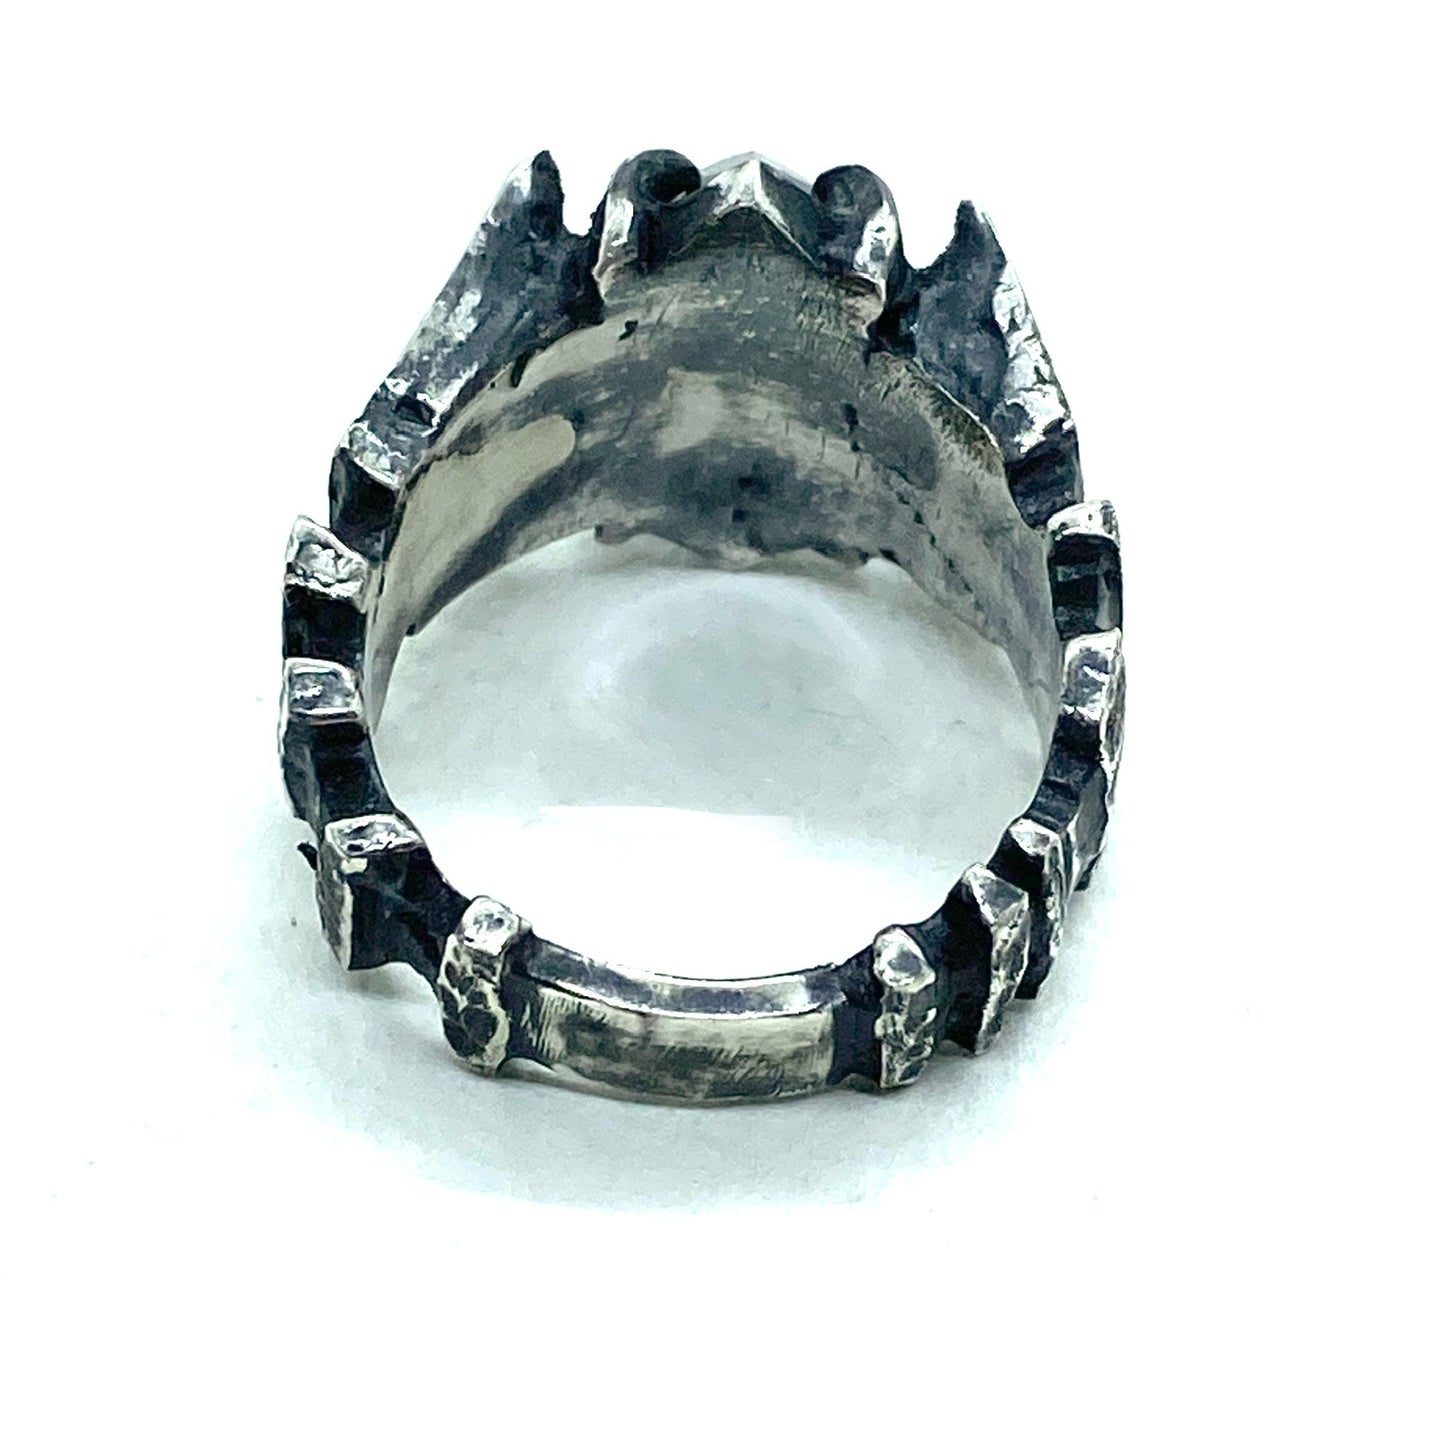 As Above So Below Brutalist Ring with garnet in Sterling Silver